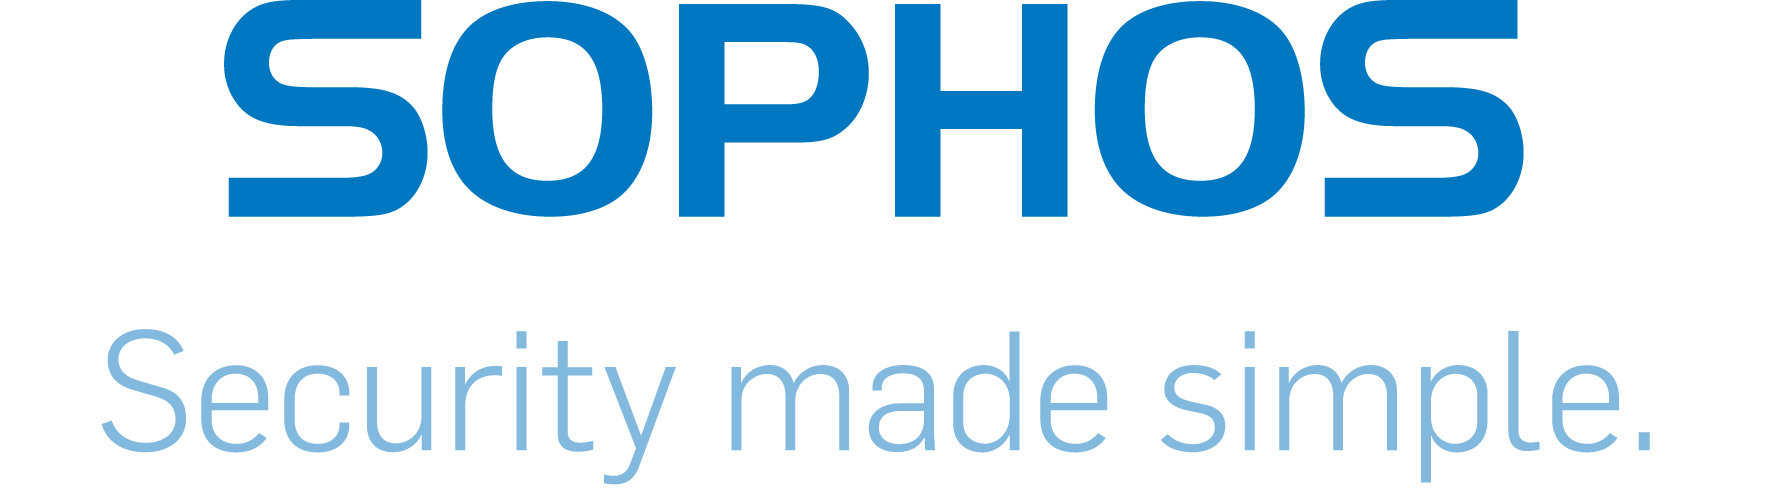 sophos logo centred